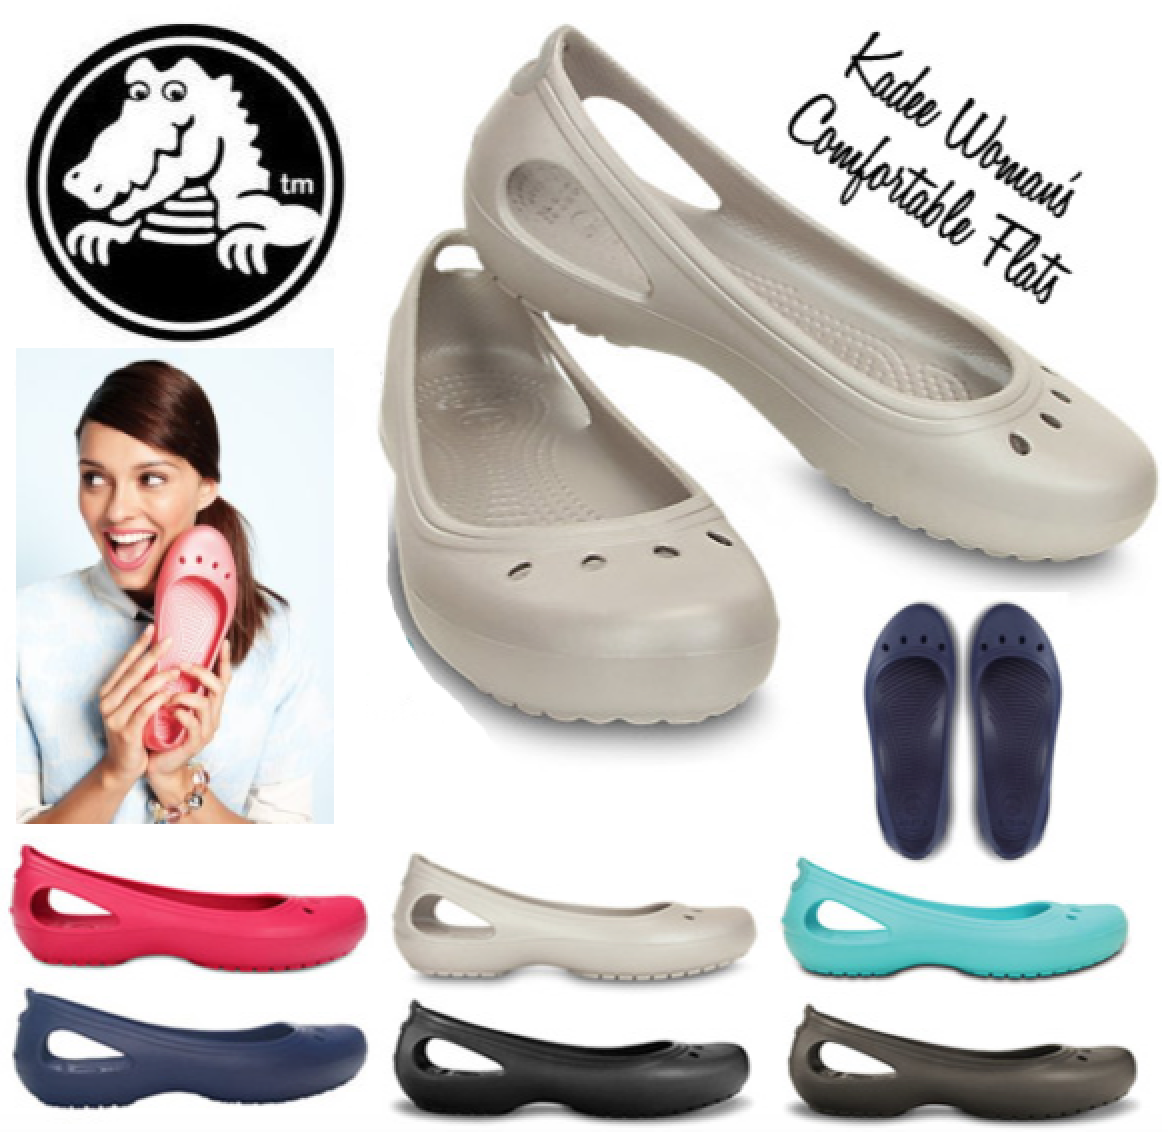 crocs women's shoes kadee flats